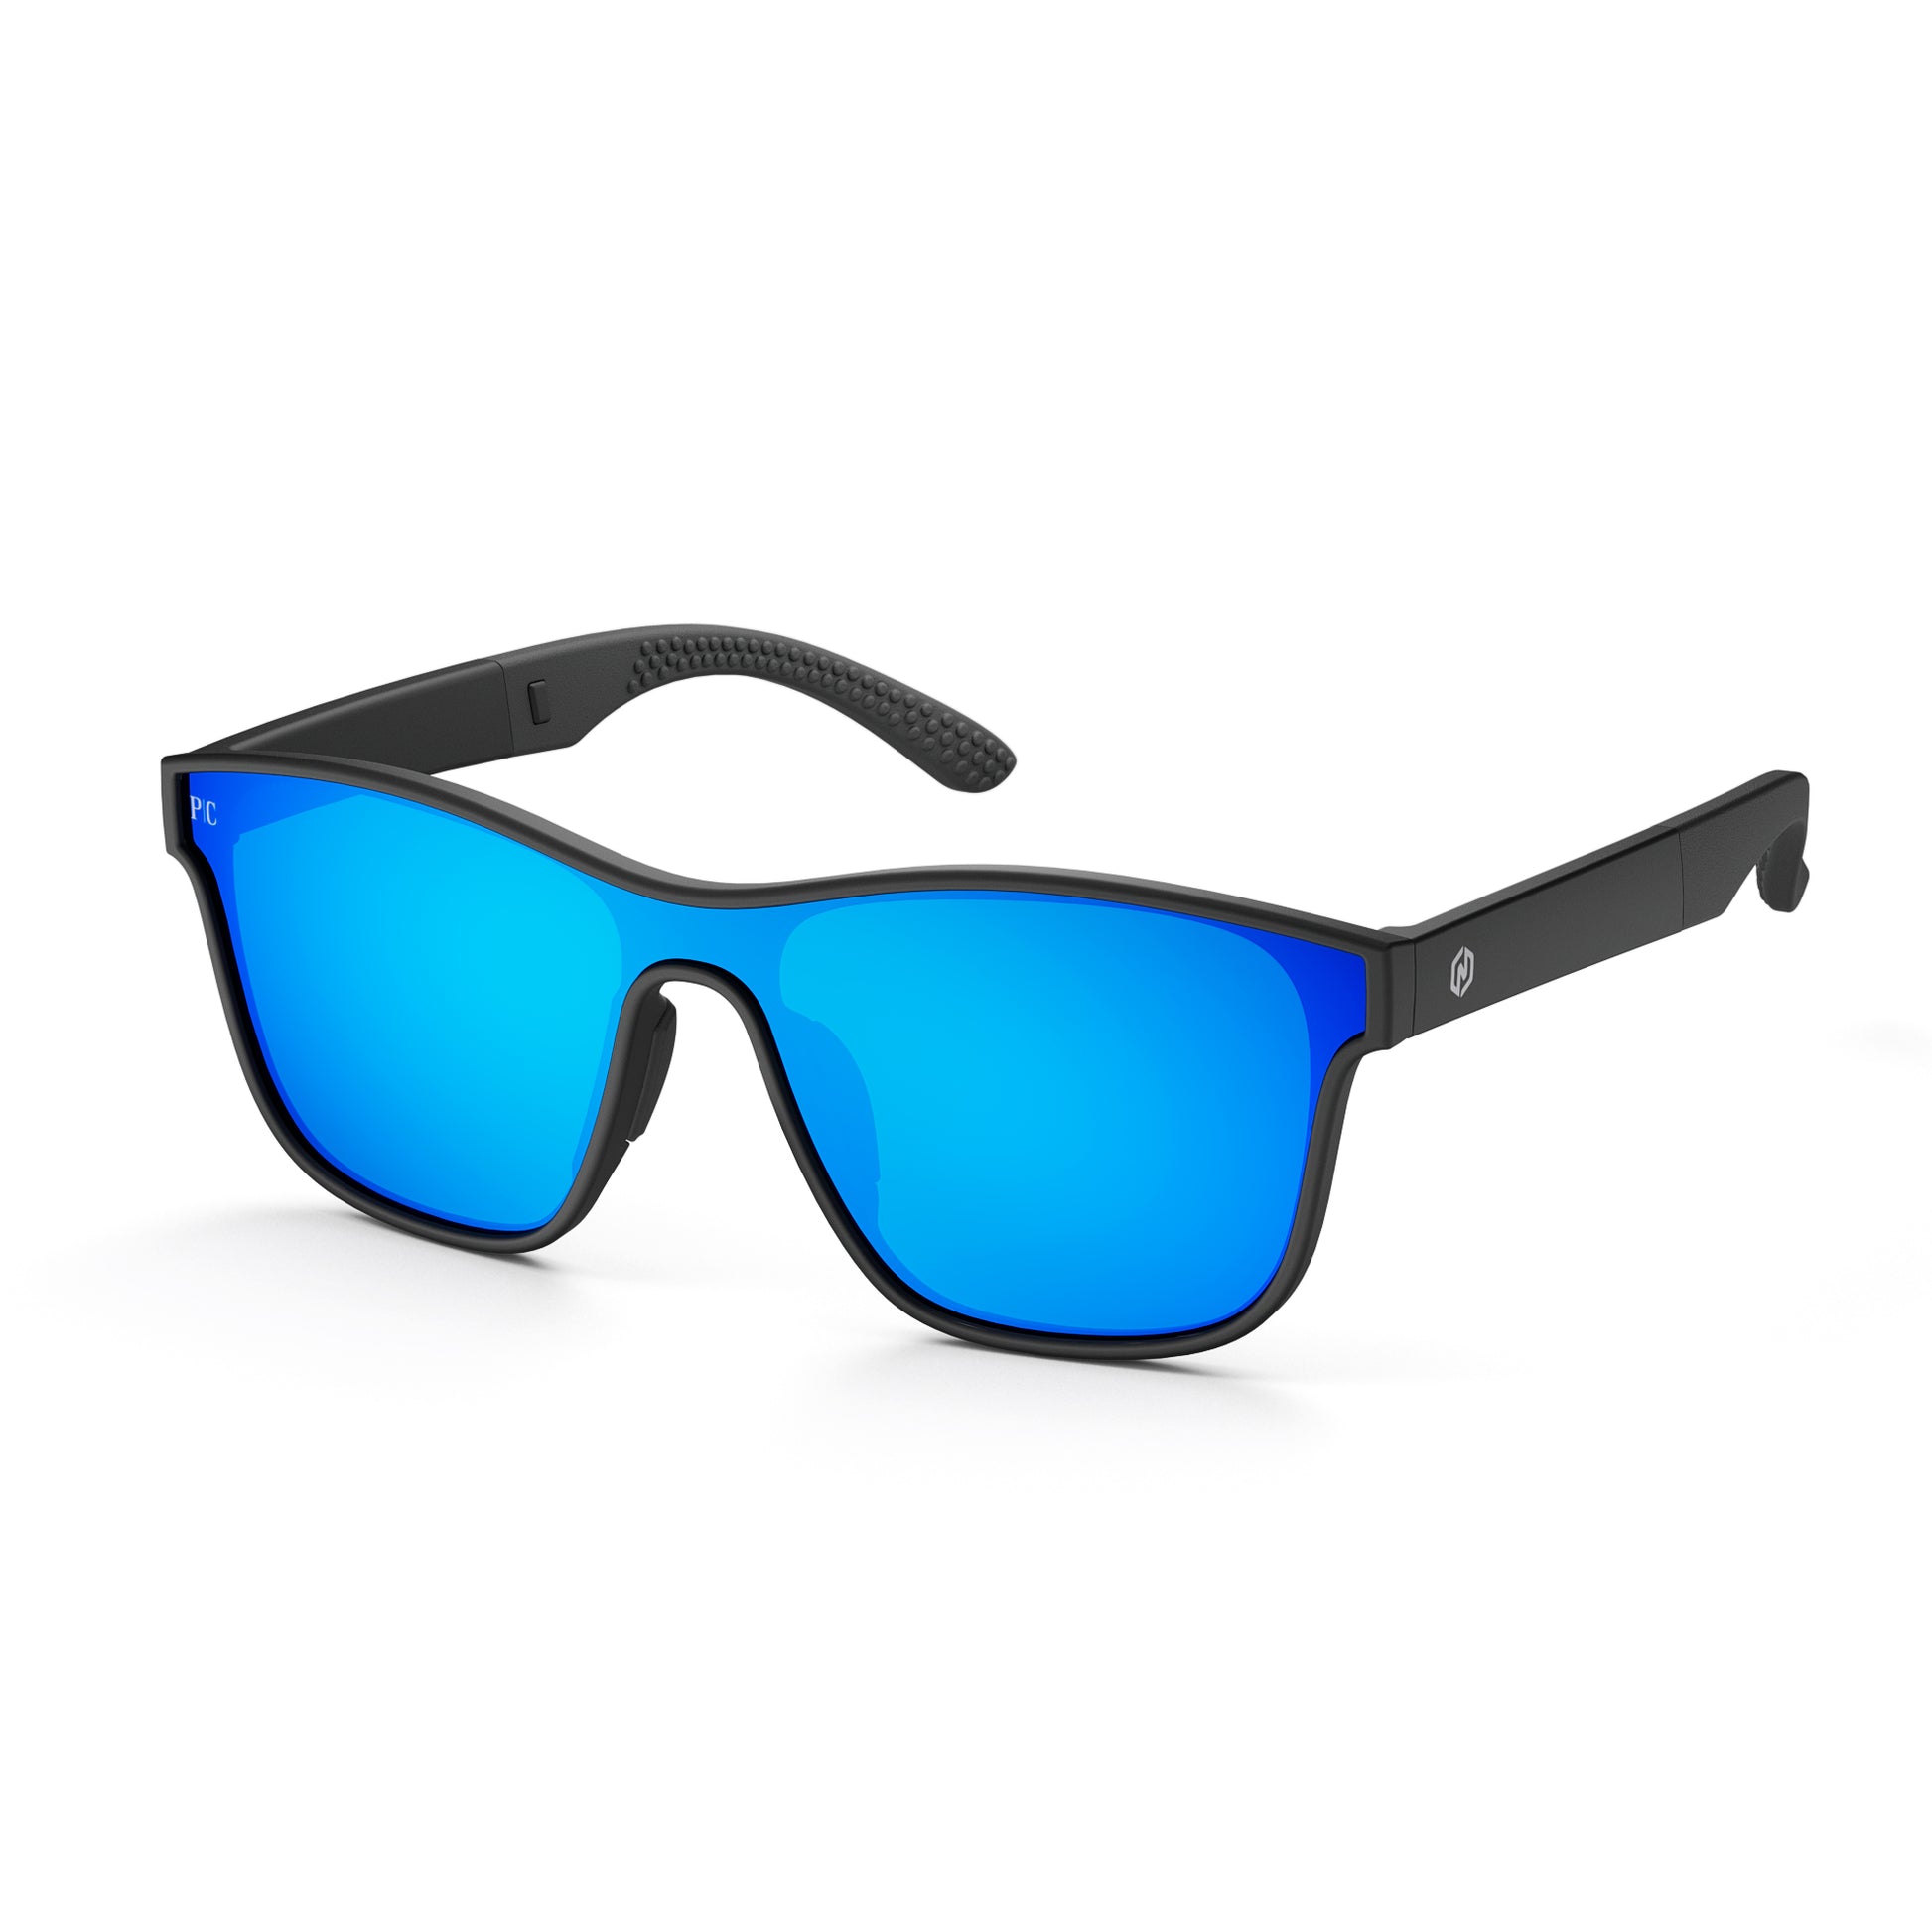 Buy Eyewear & Sunglasses Online